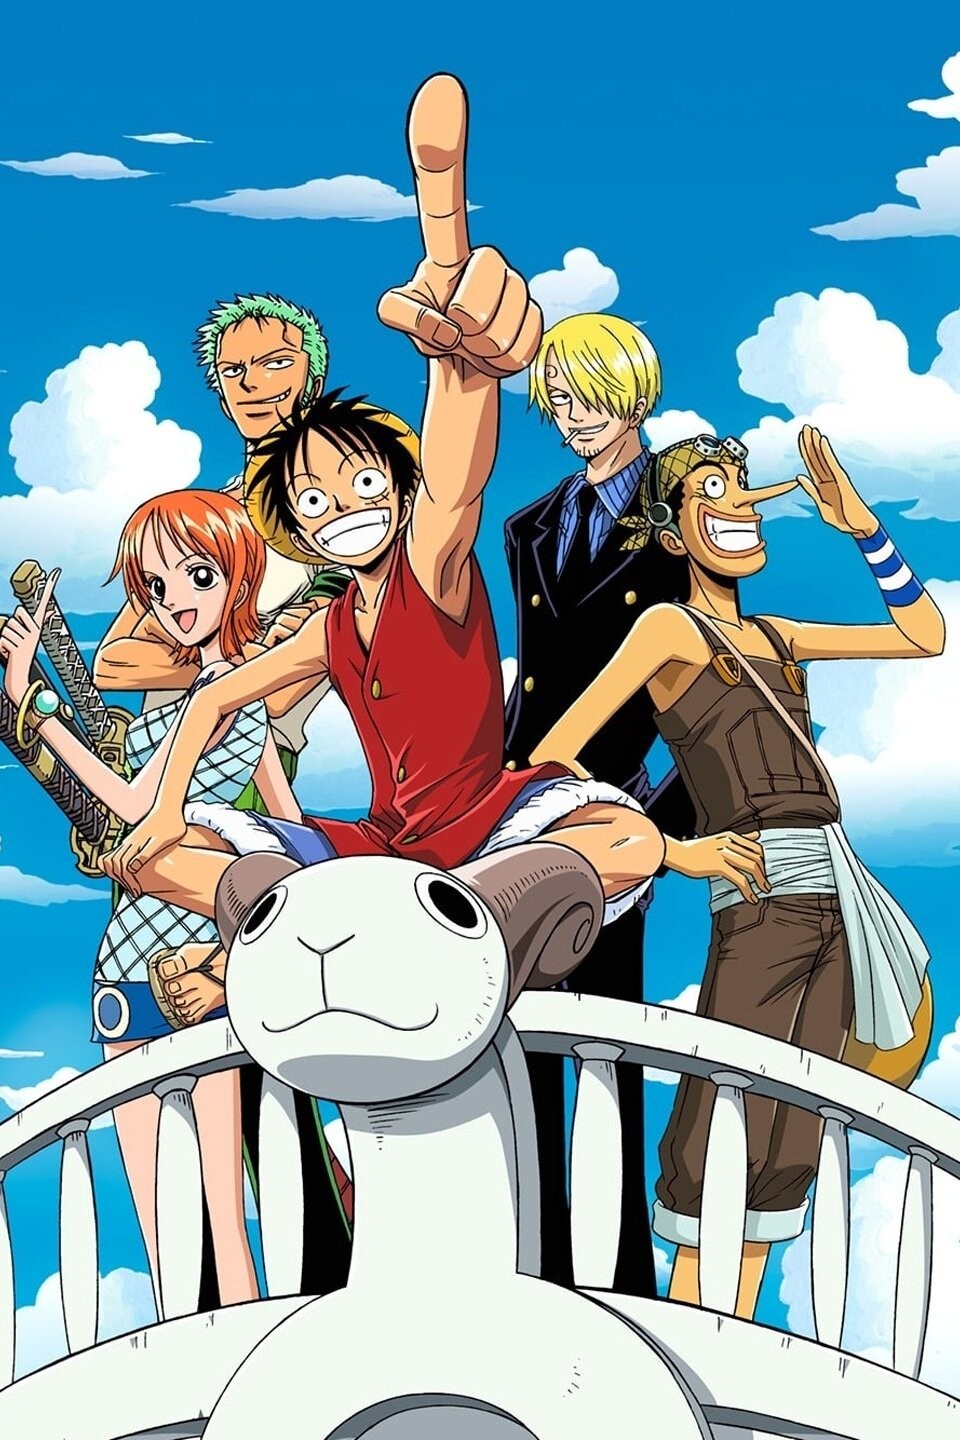 One Piece | AnimeSchedule